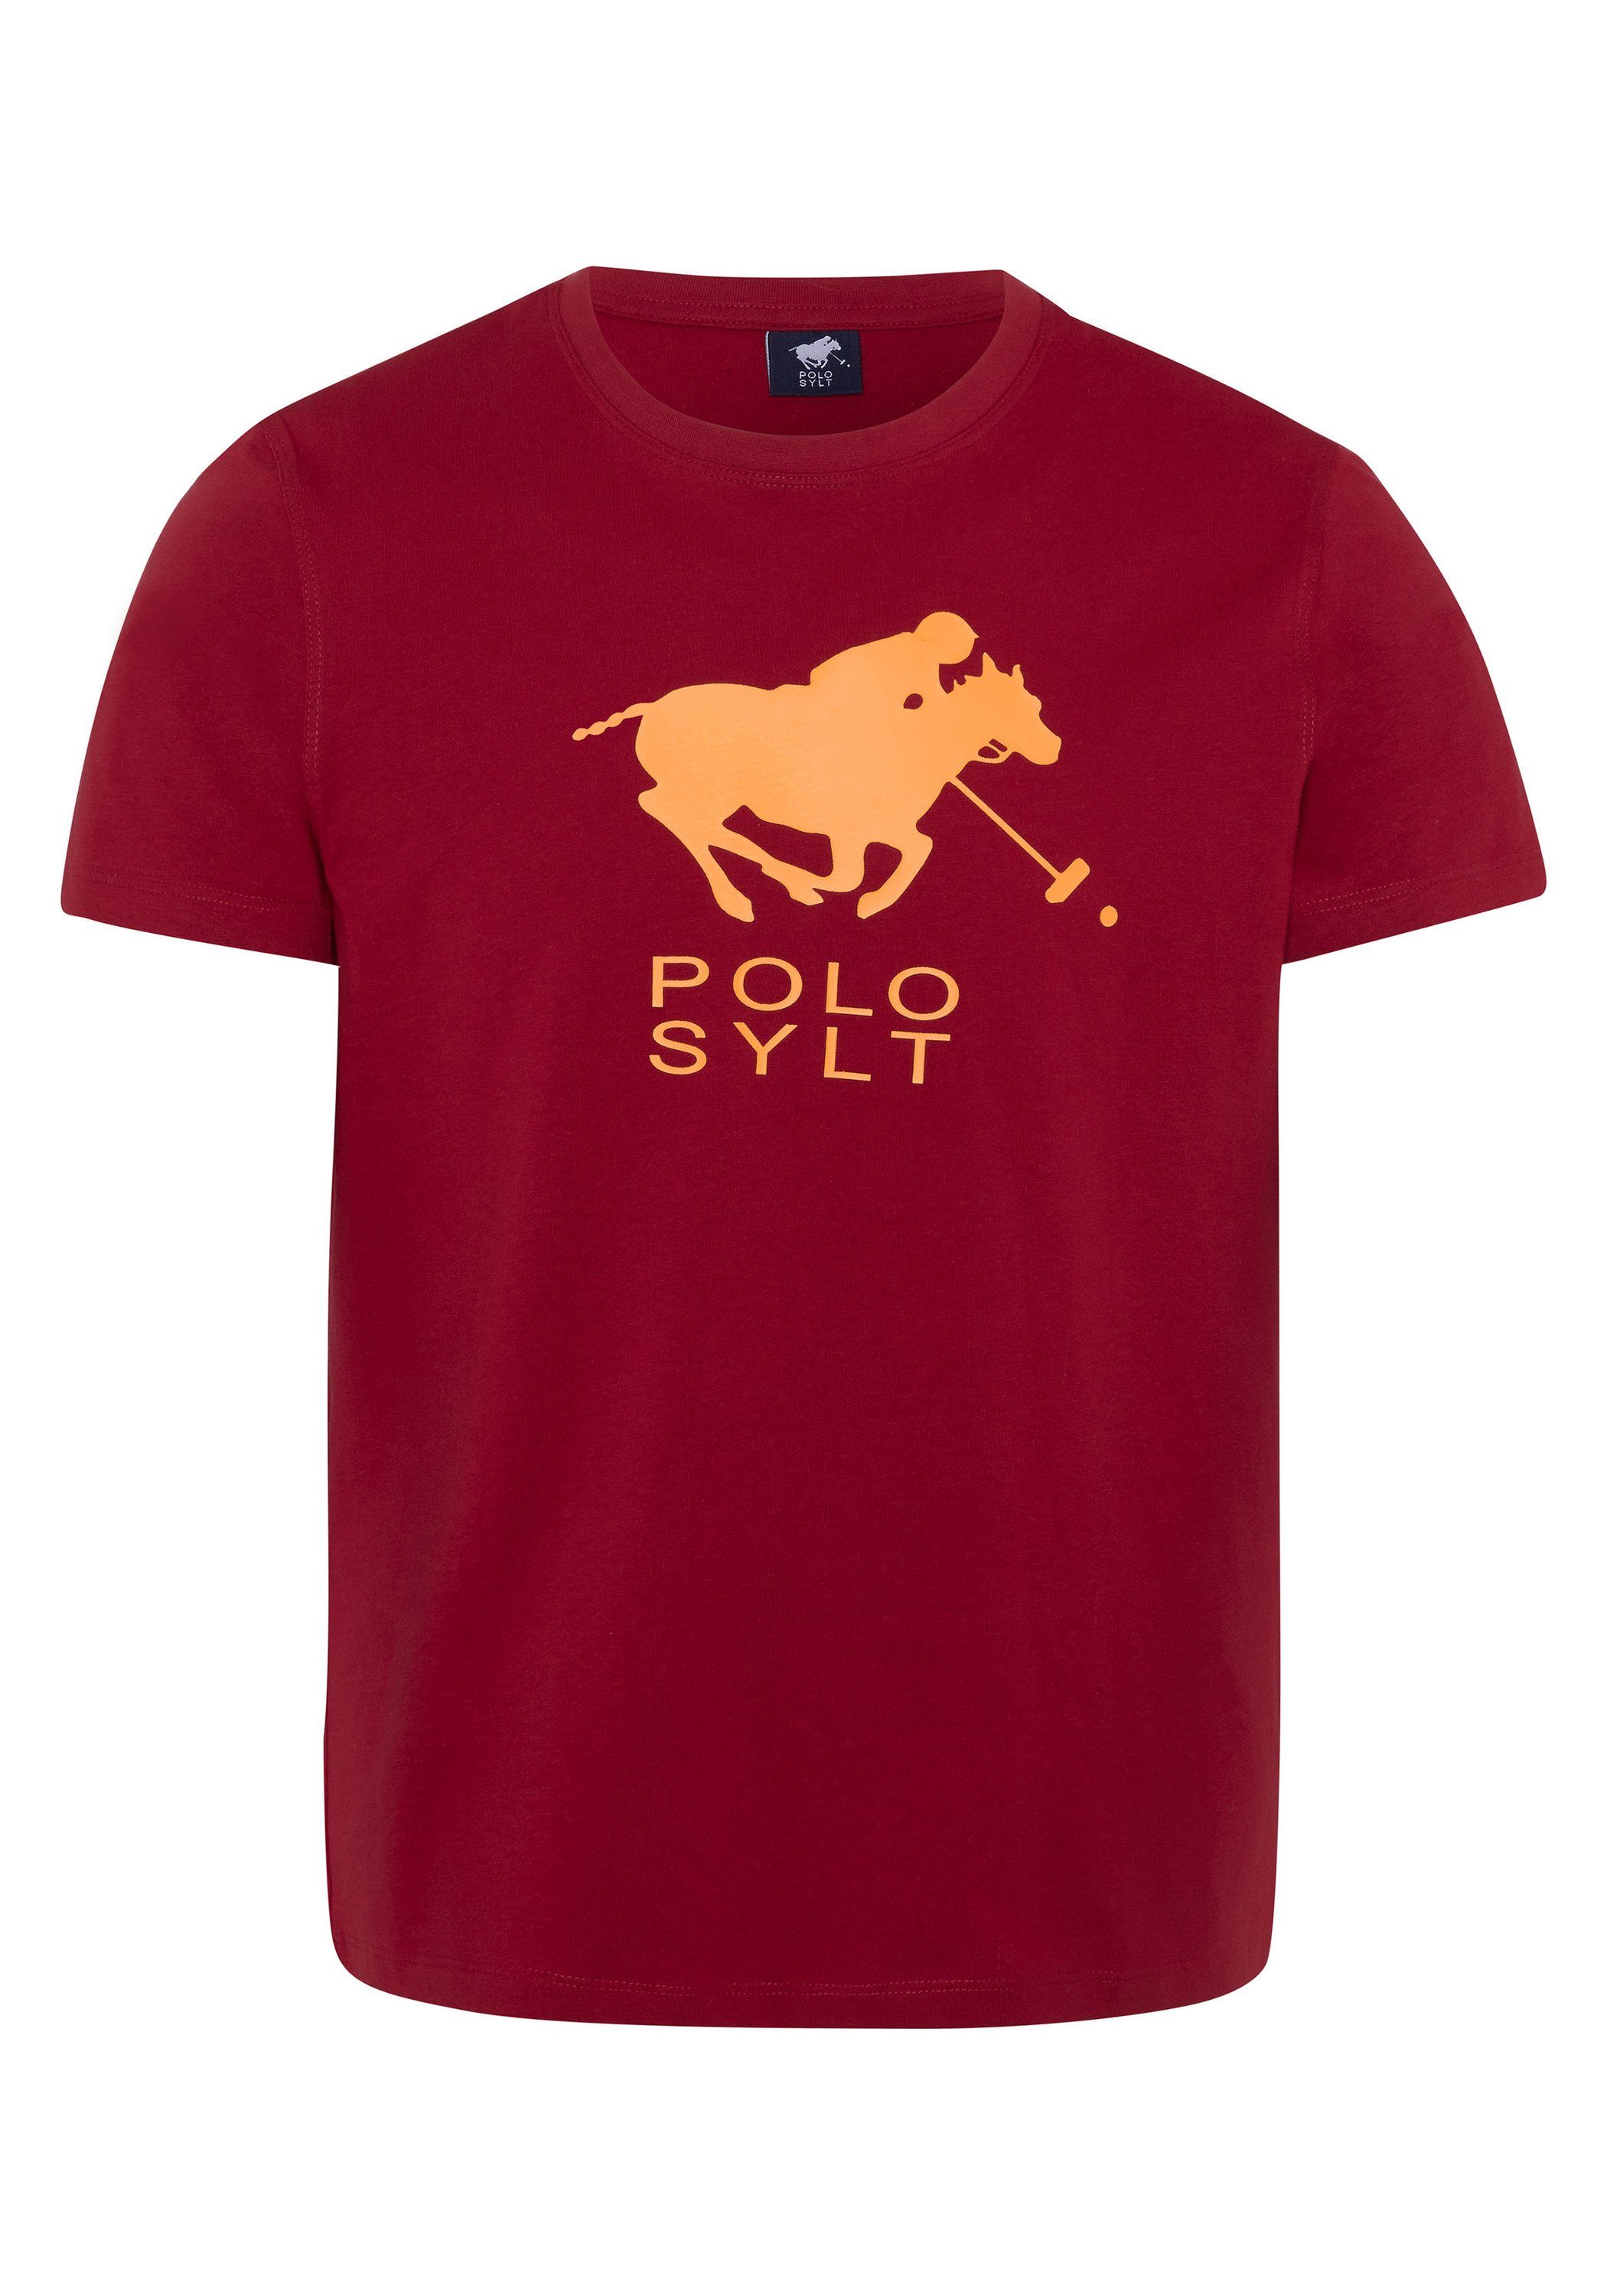 Polo Sylt Print-Shirt mit Neon Logo Frontprint Chili Pepper